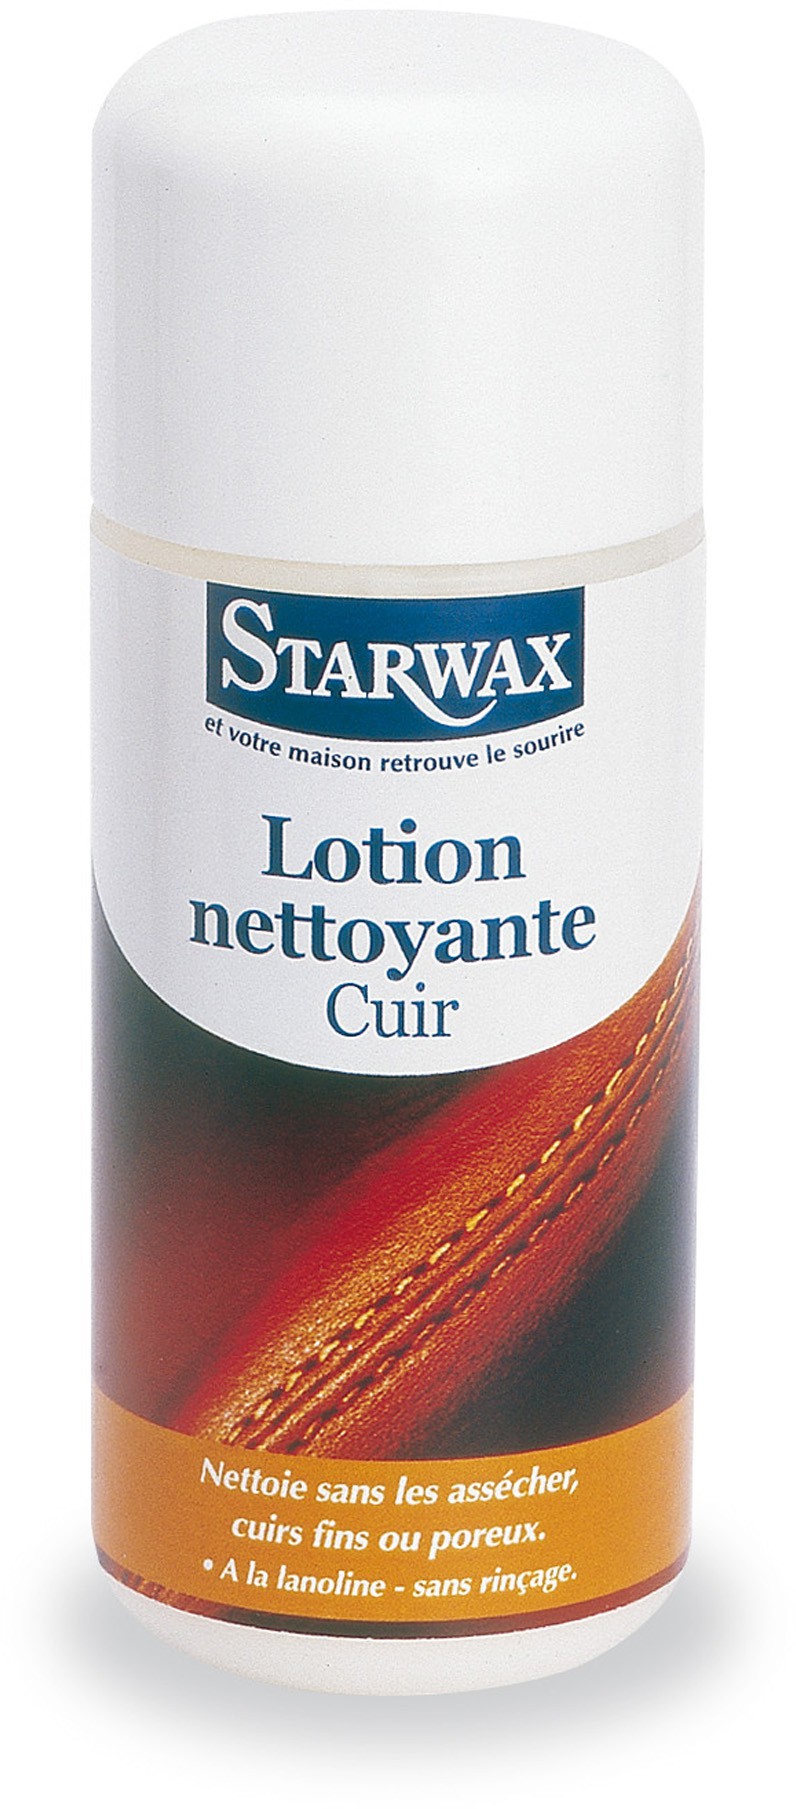 Lotion nettoyante cuir - STARWAX - 200mL